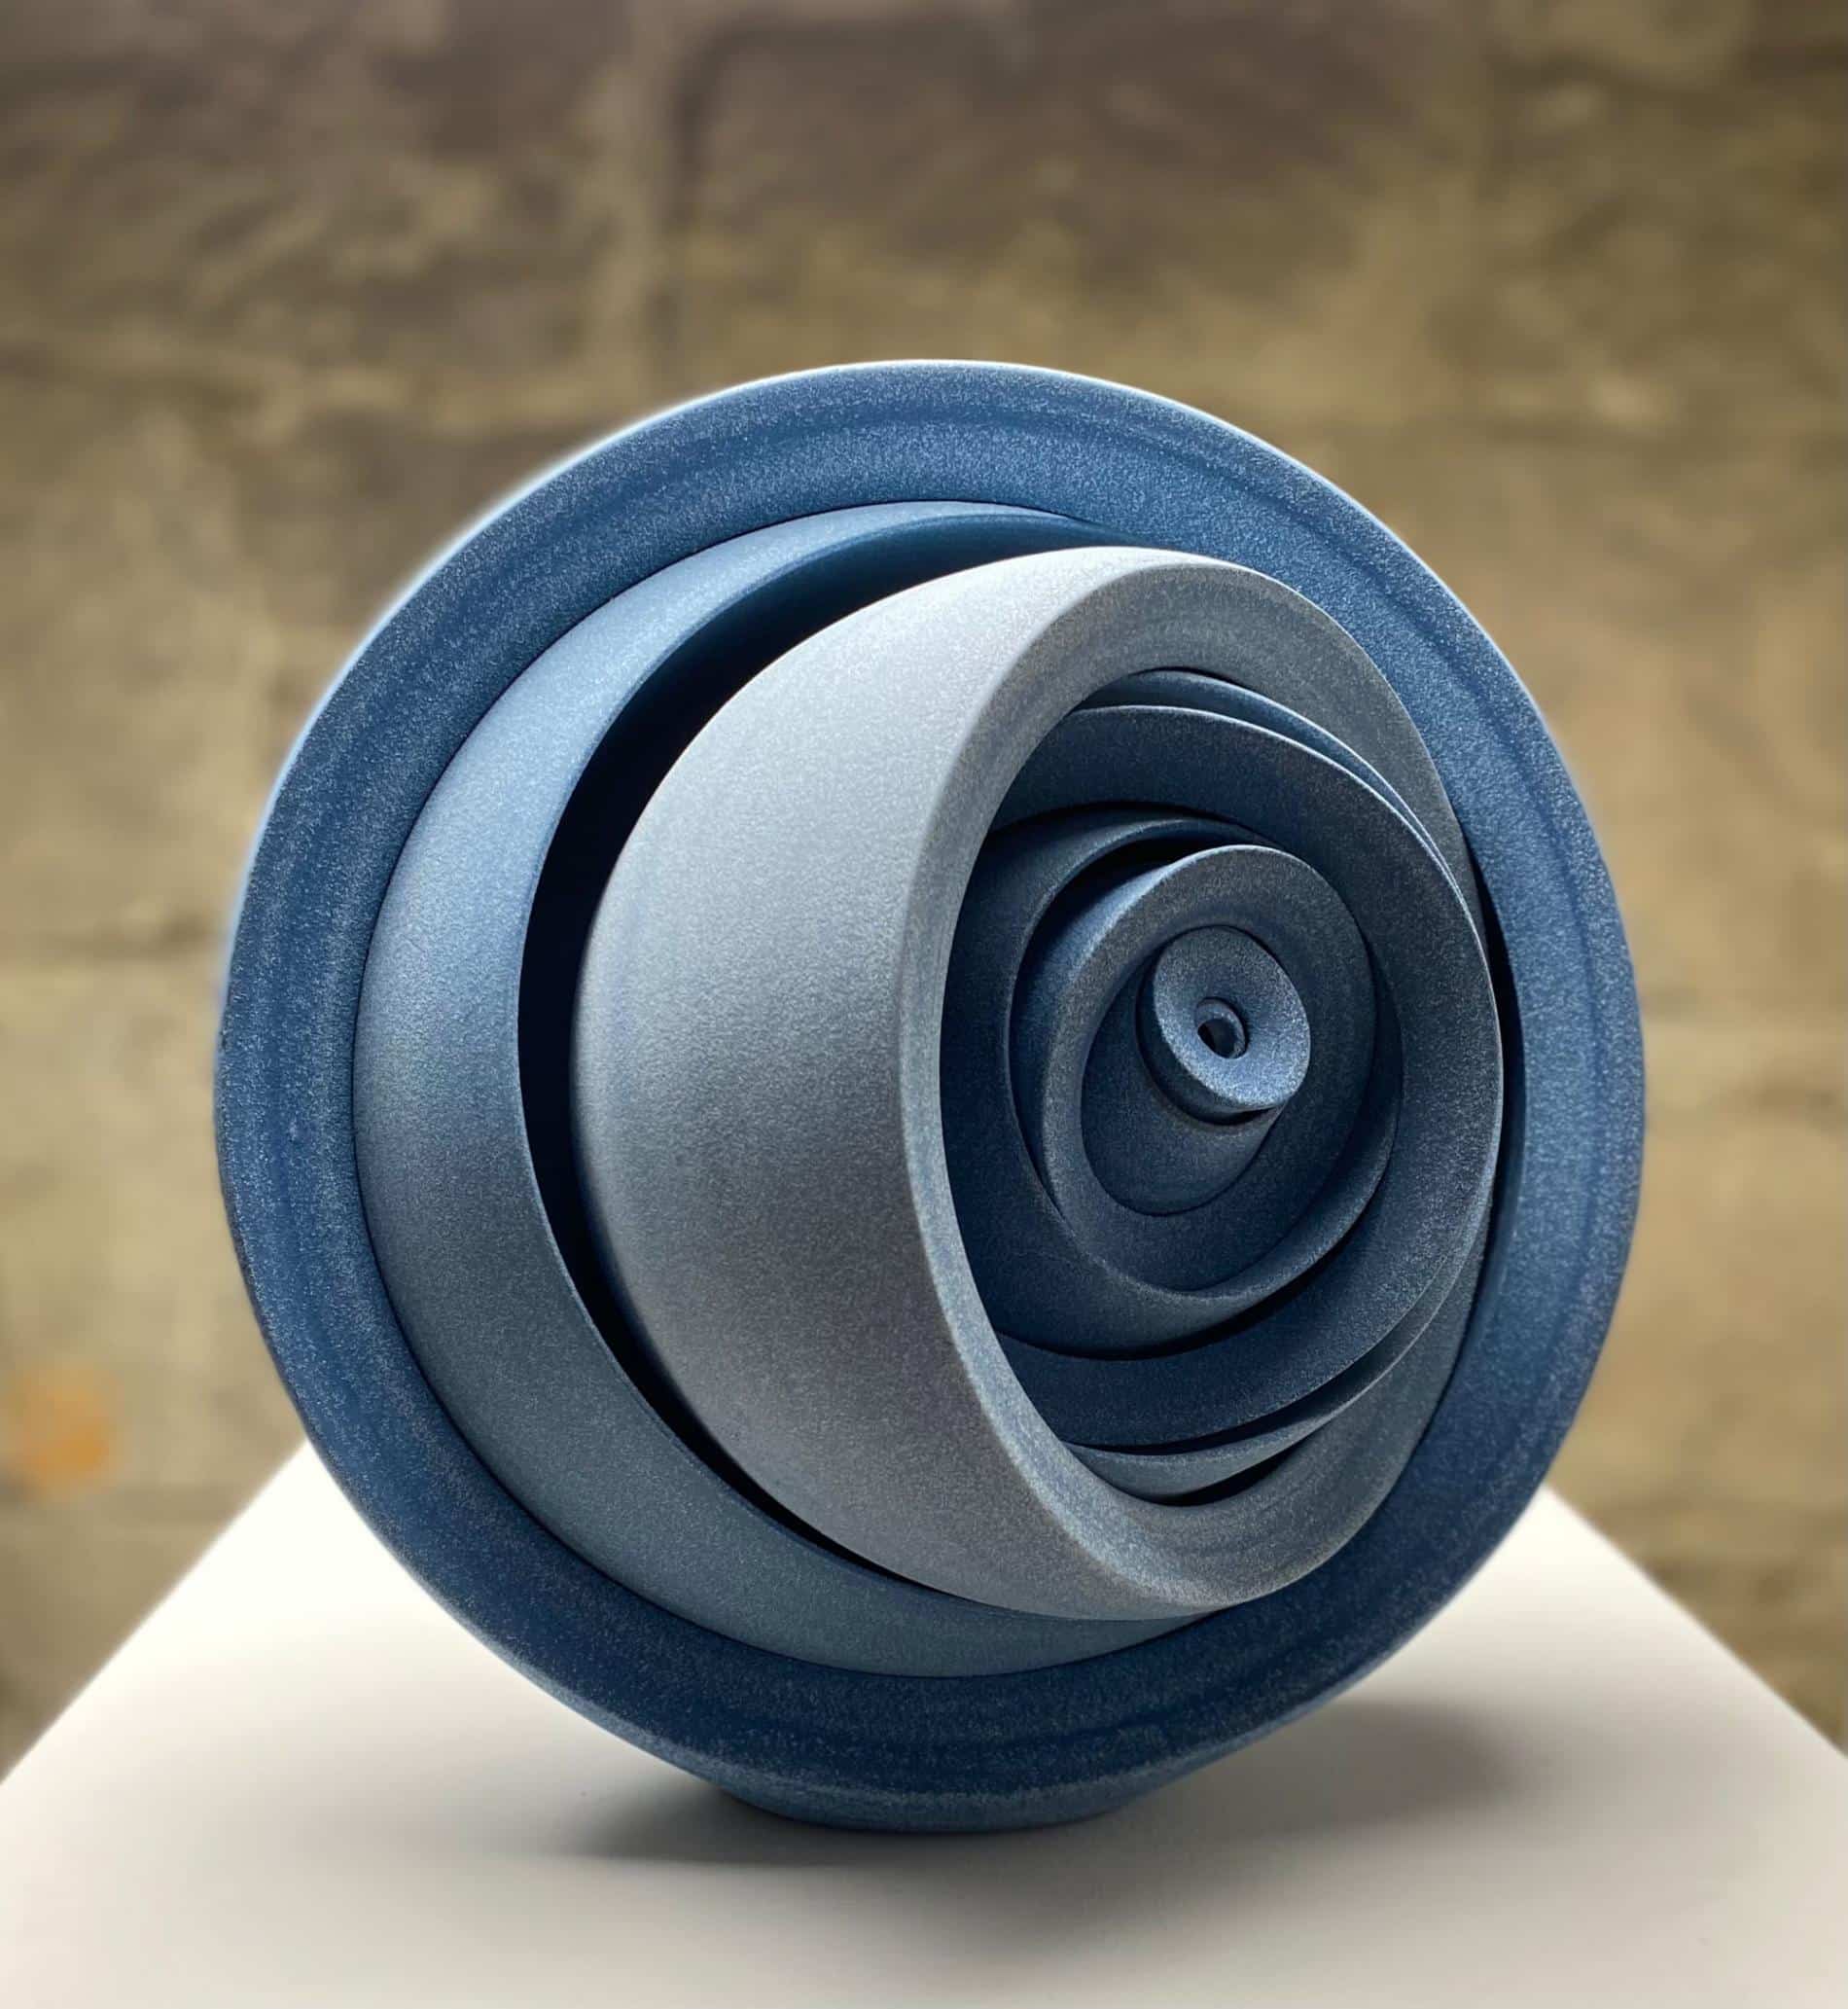 chambers escultura contemporanea con procesos tradicionales color azul tridimensional